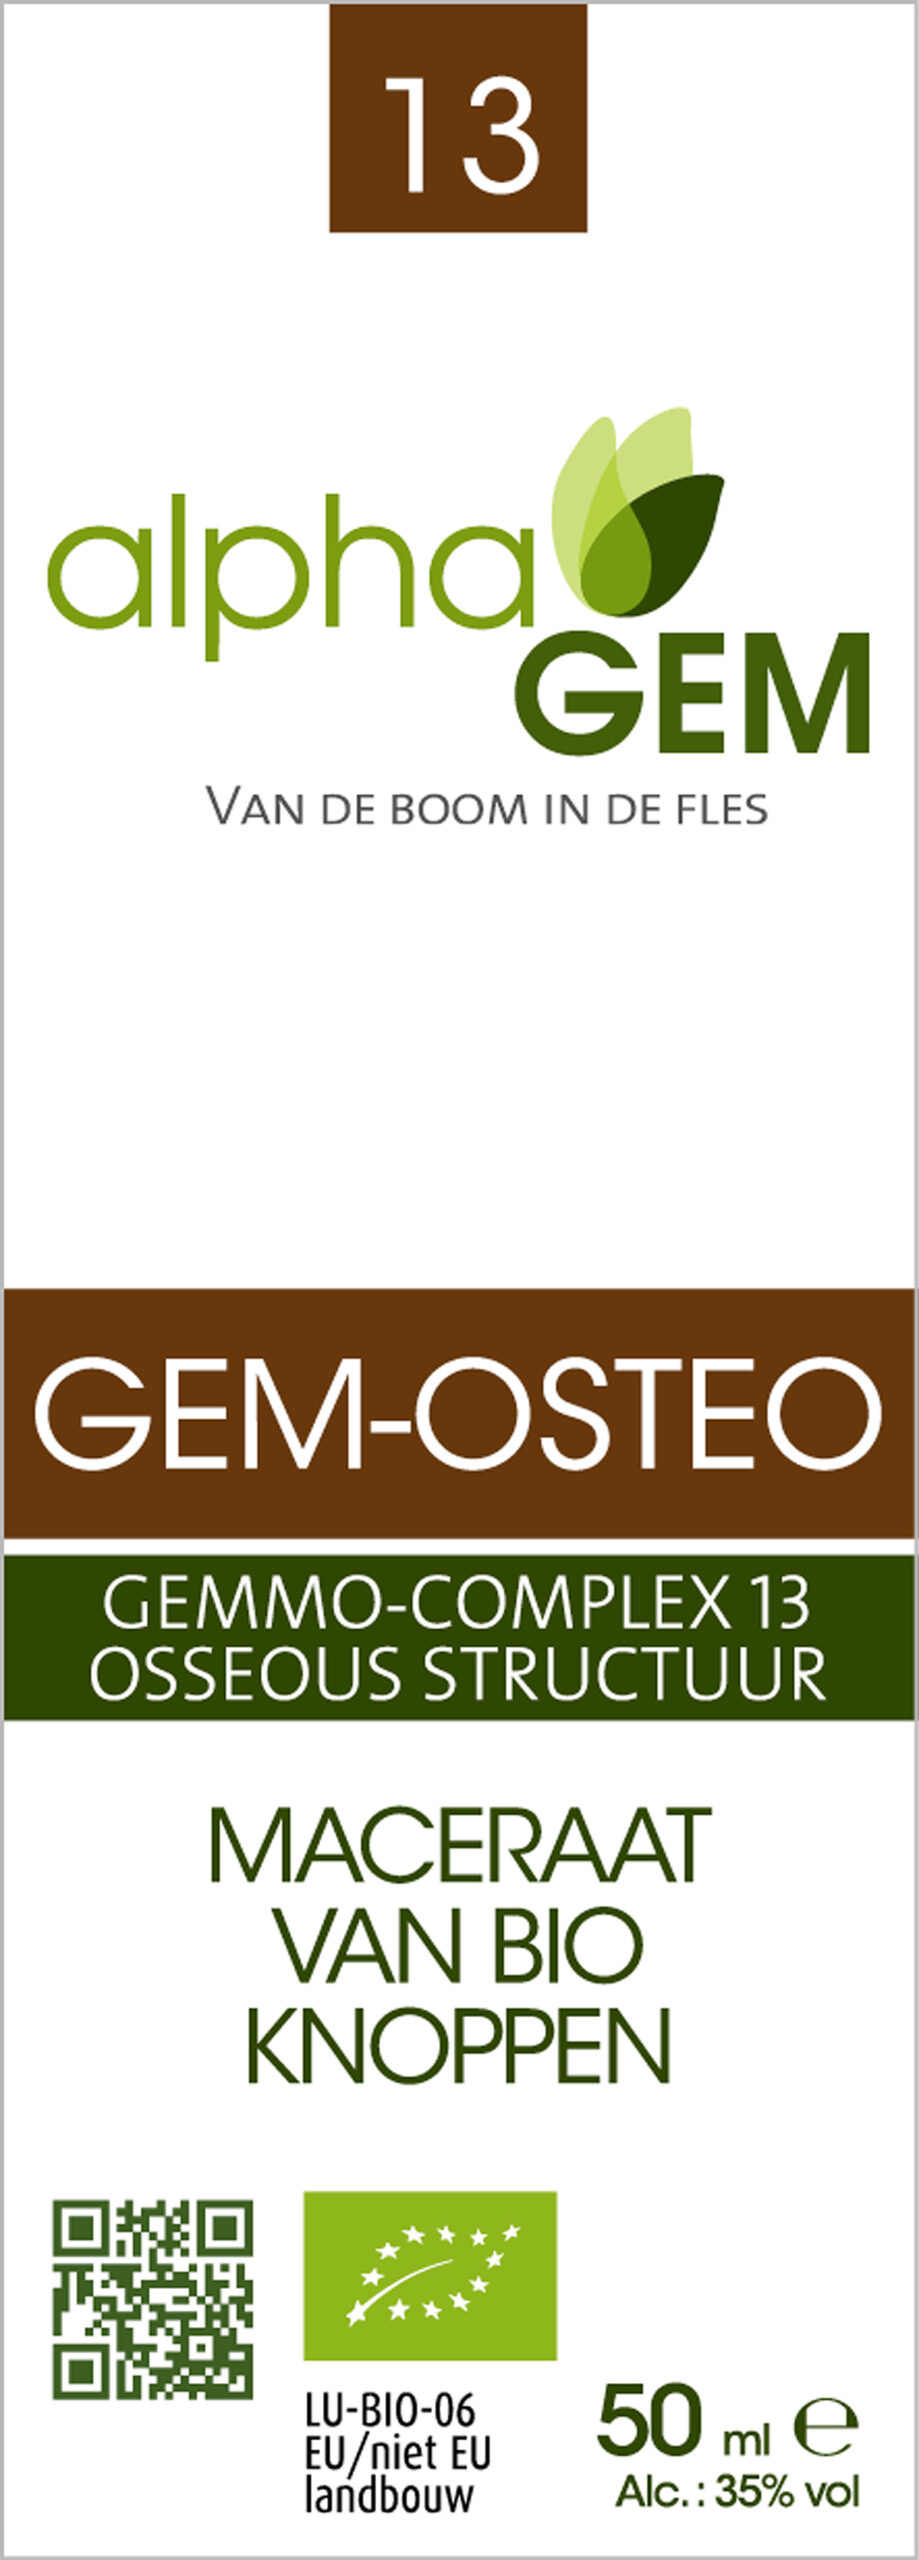 GEM-OSTEO